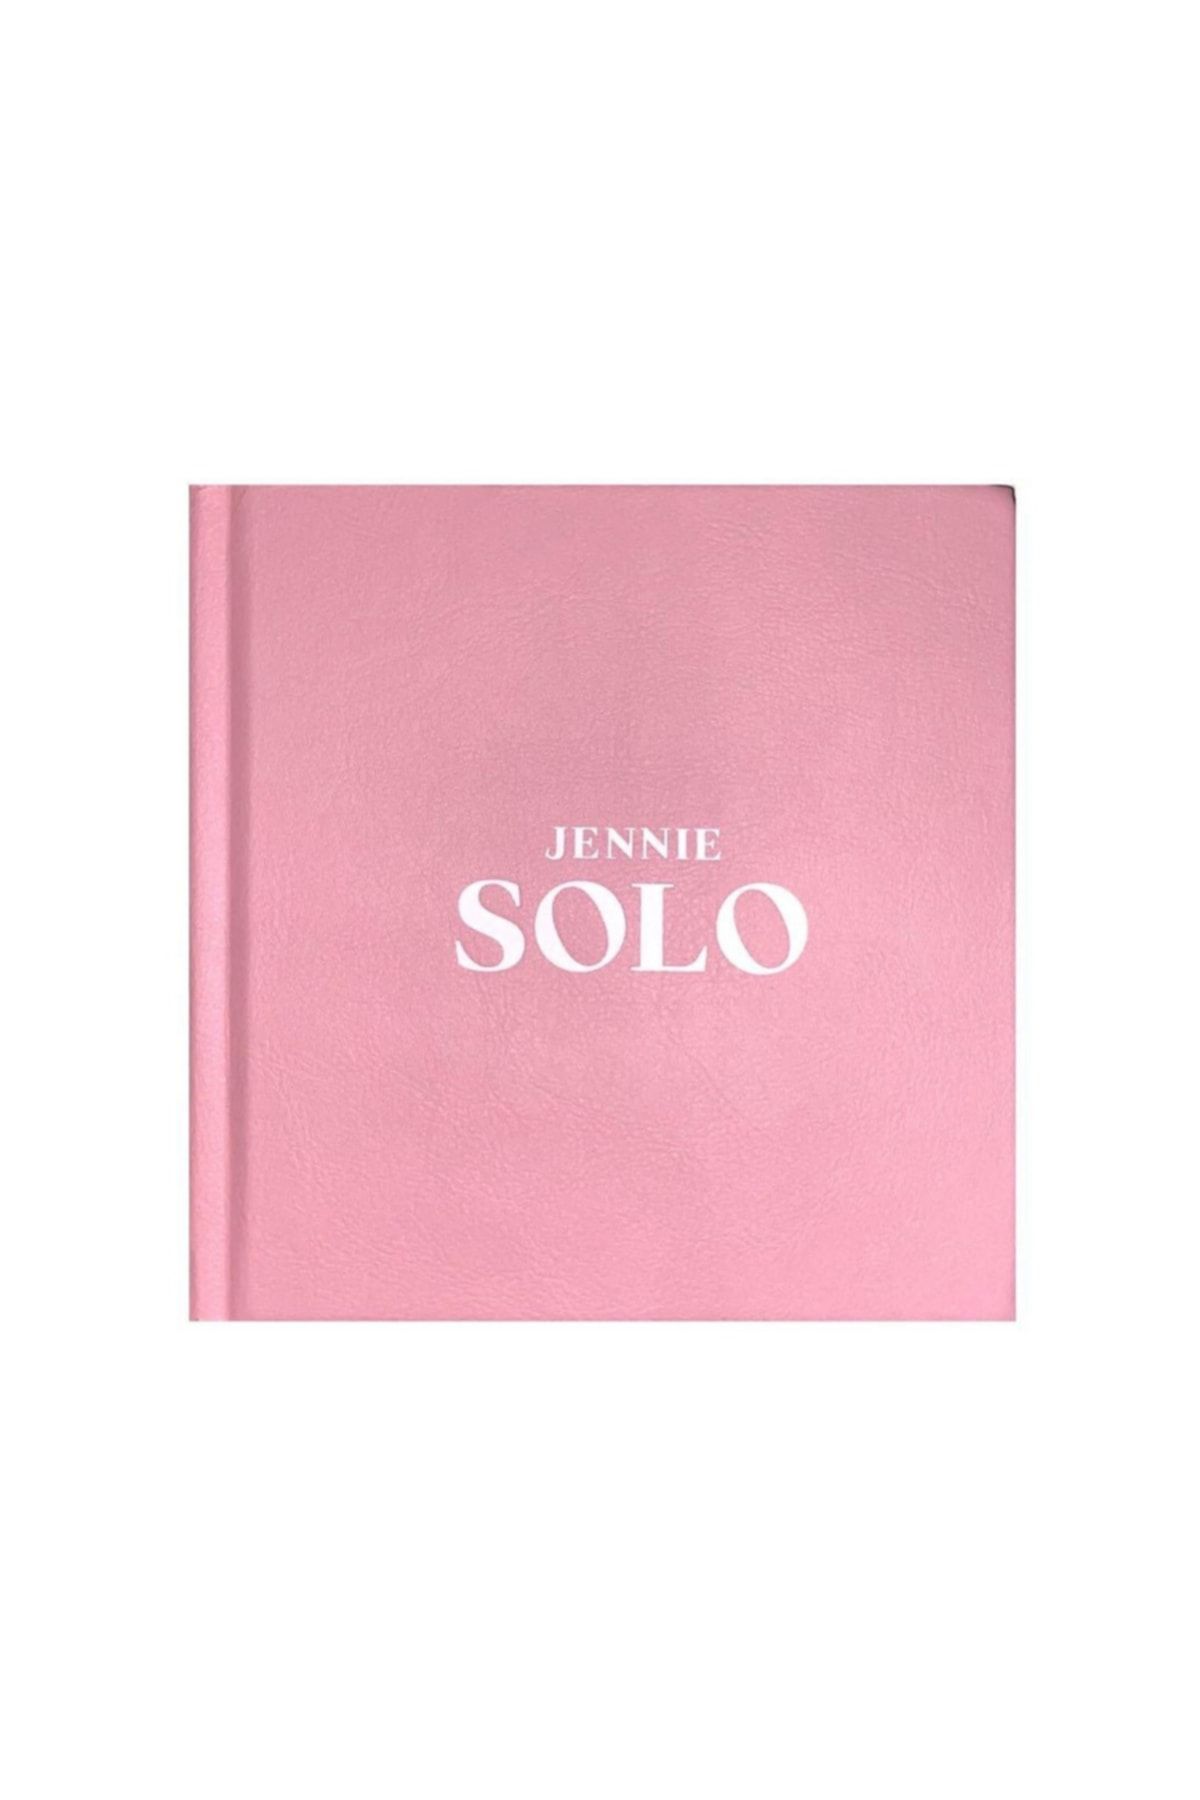 Kpop Dünyasi Blackpınk Jennie Solo Albüm